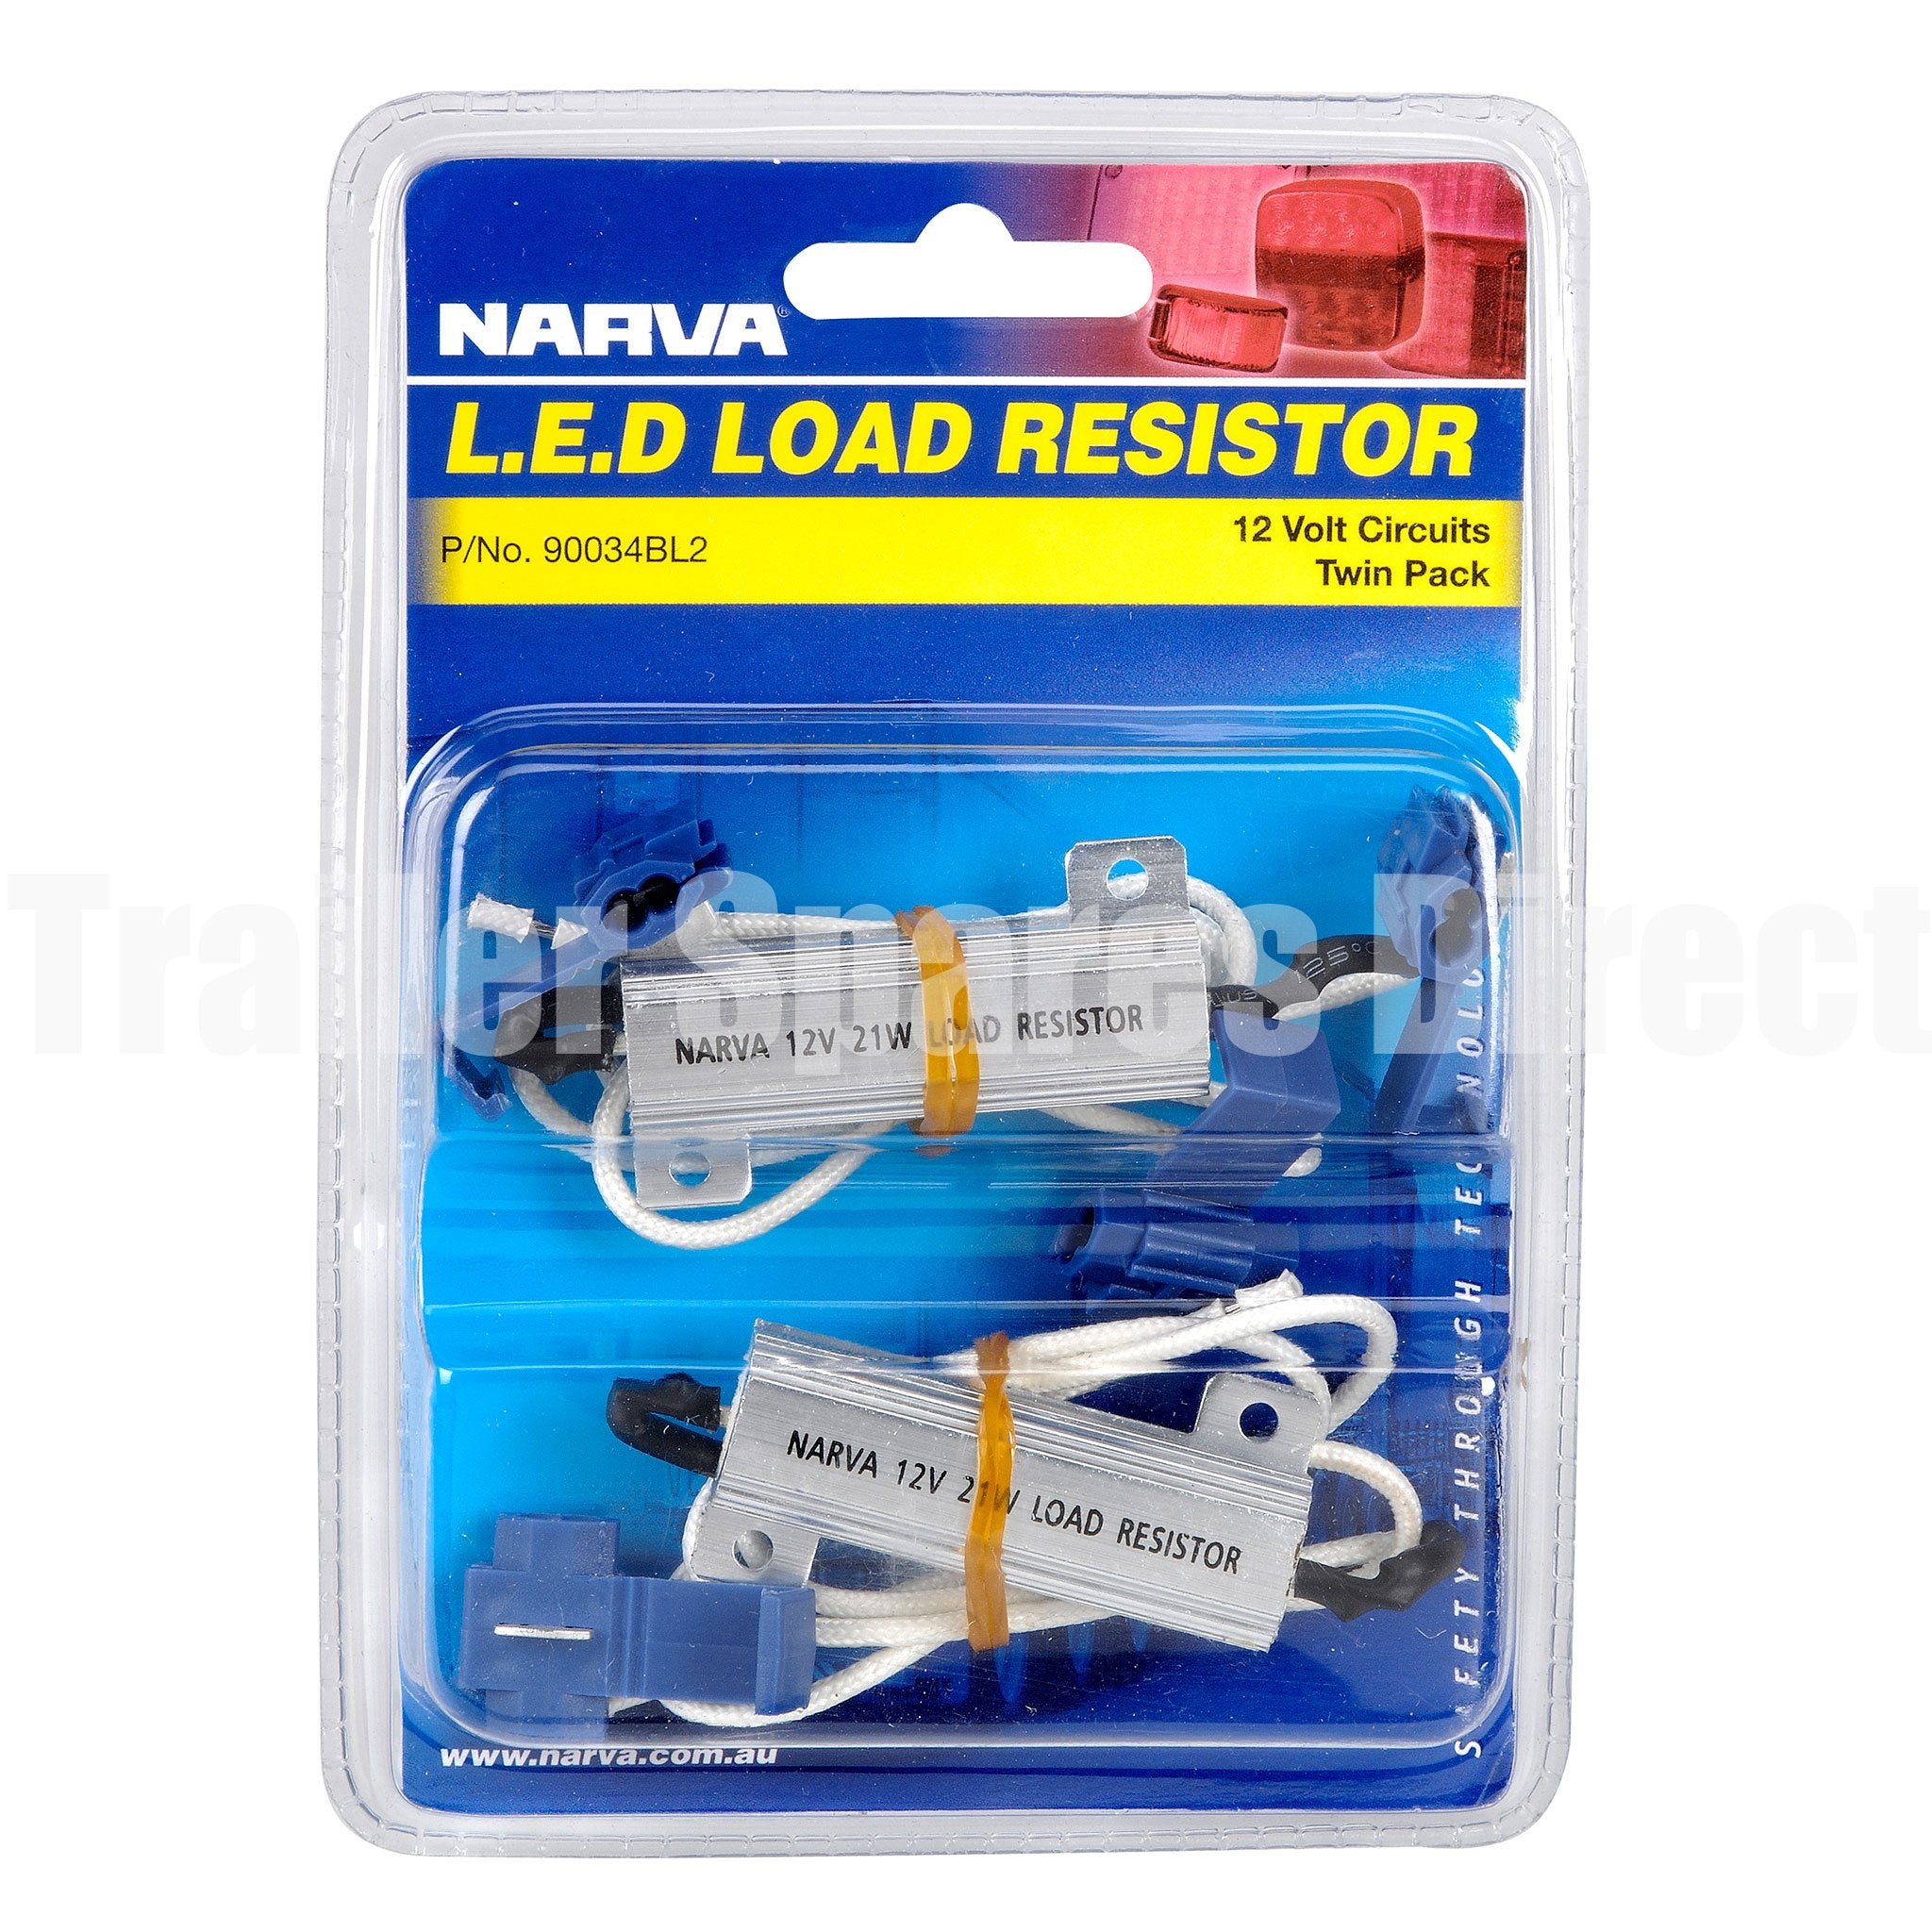 Narva Load Resistor 2 pack for 12v circuits. 